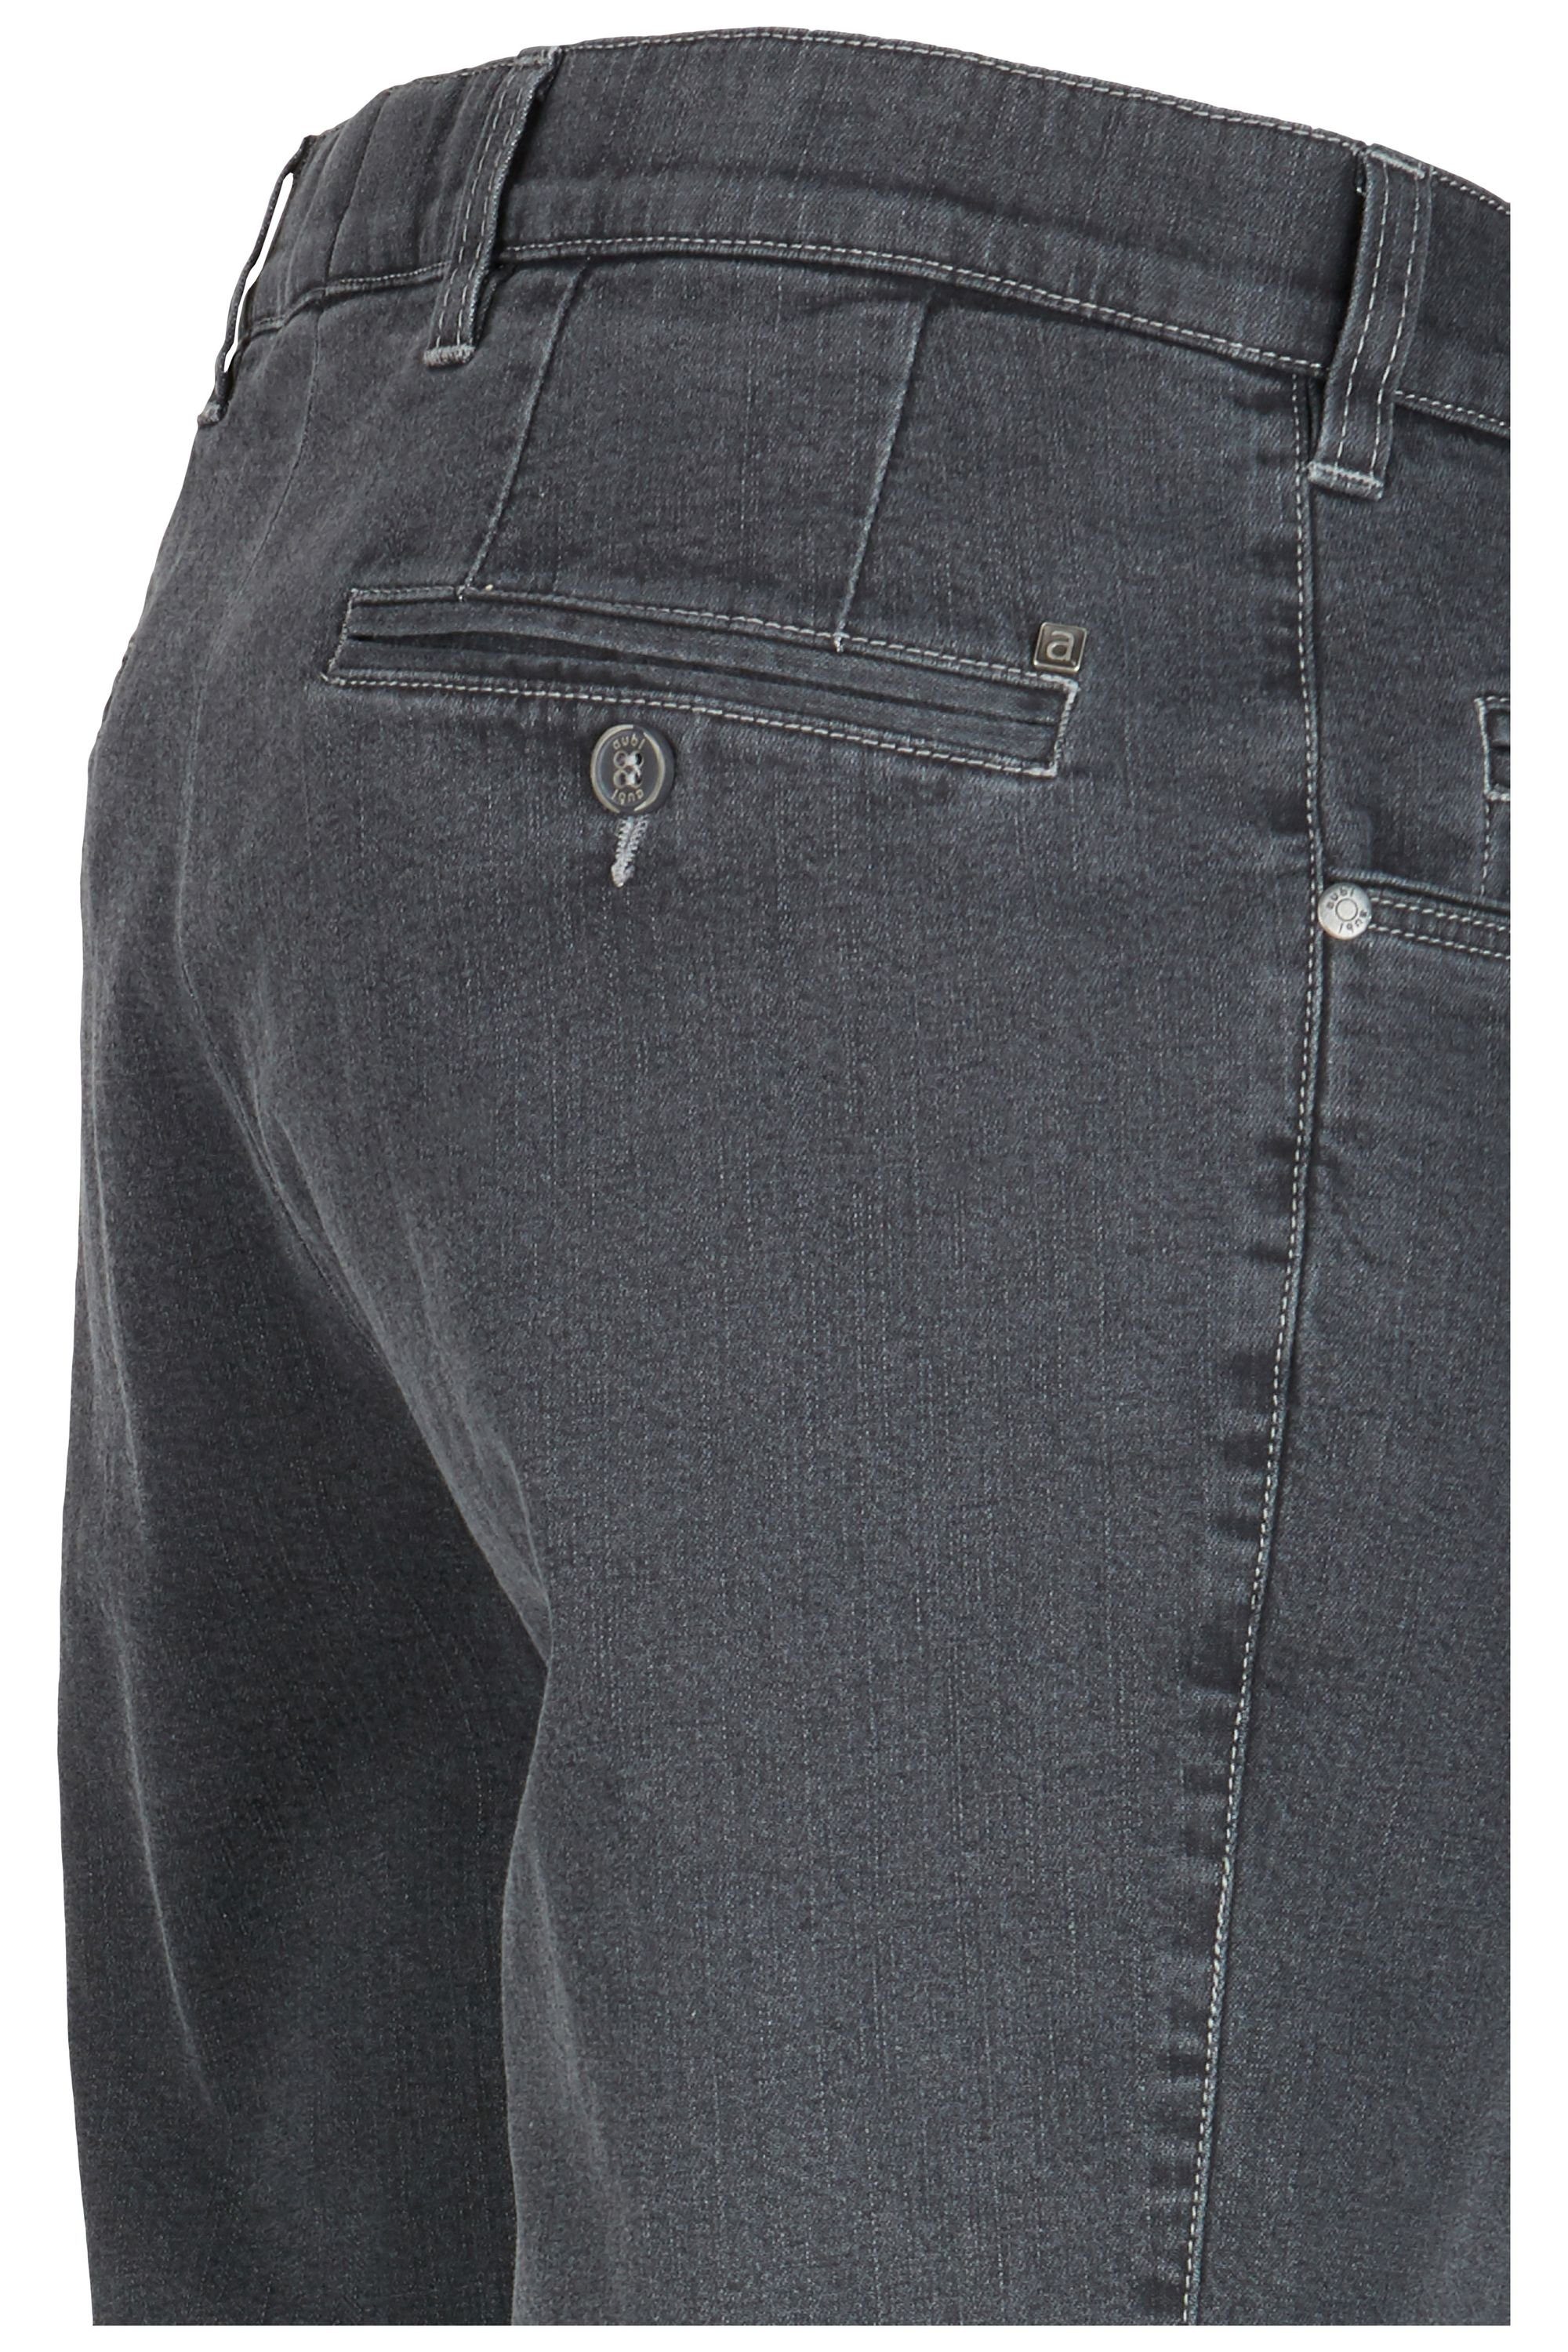 aubi: Herren Fit Stretch Jeans (53) aubi Bequeme Modell 577 grey Hose Perfect Jeans